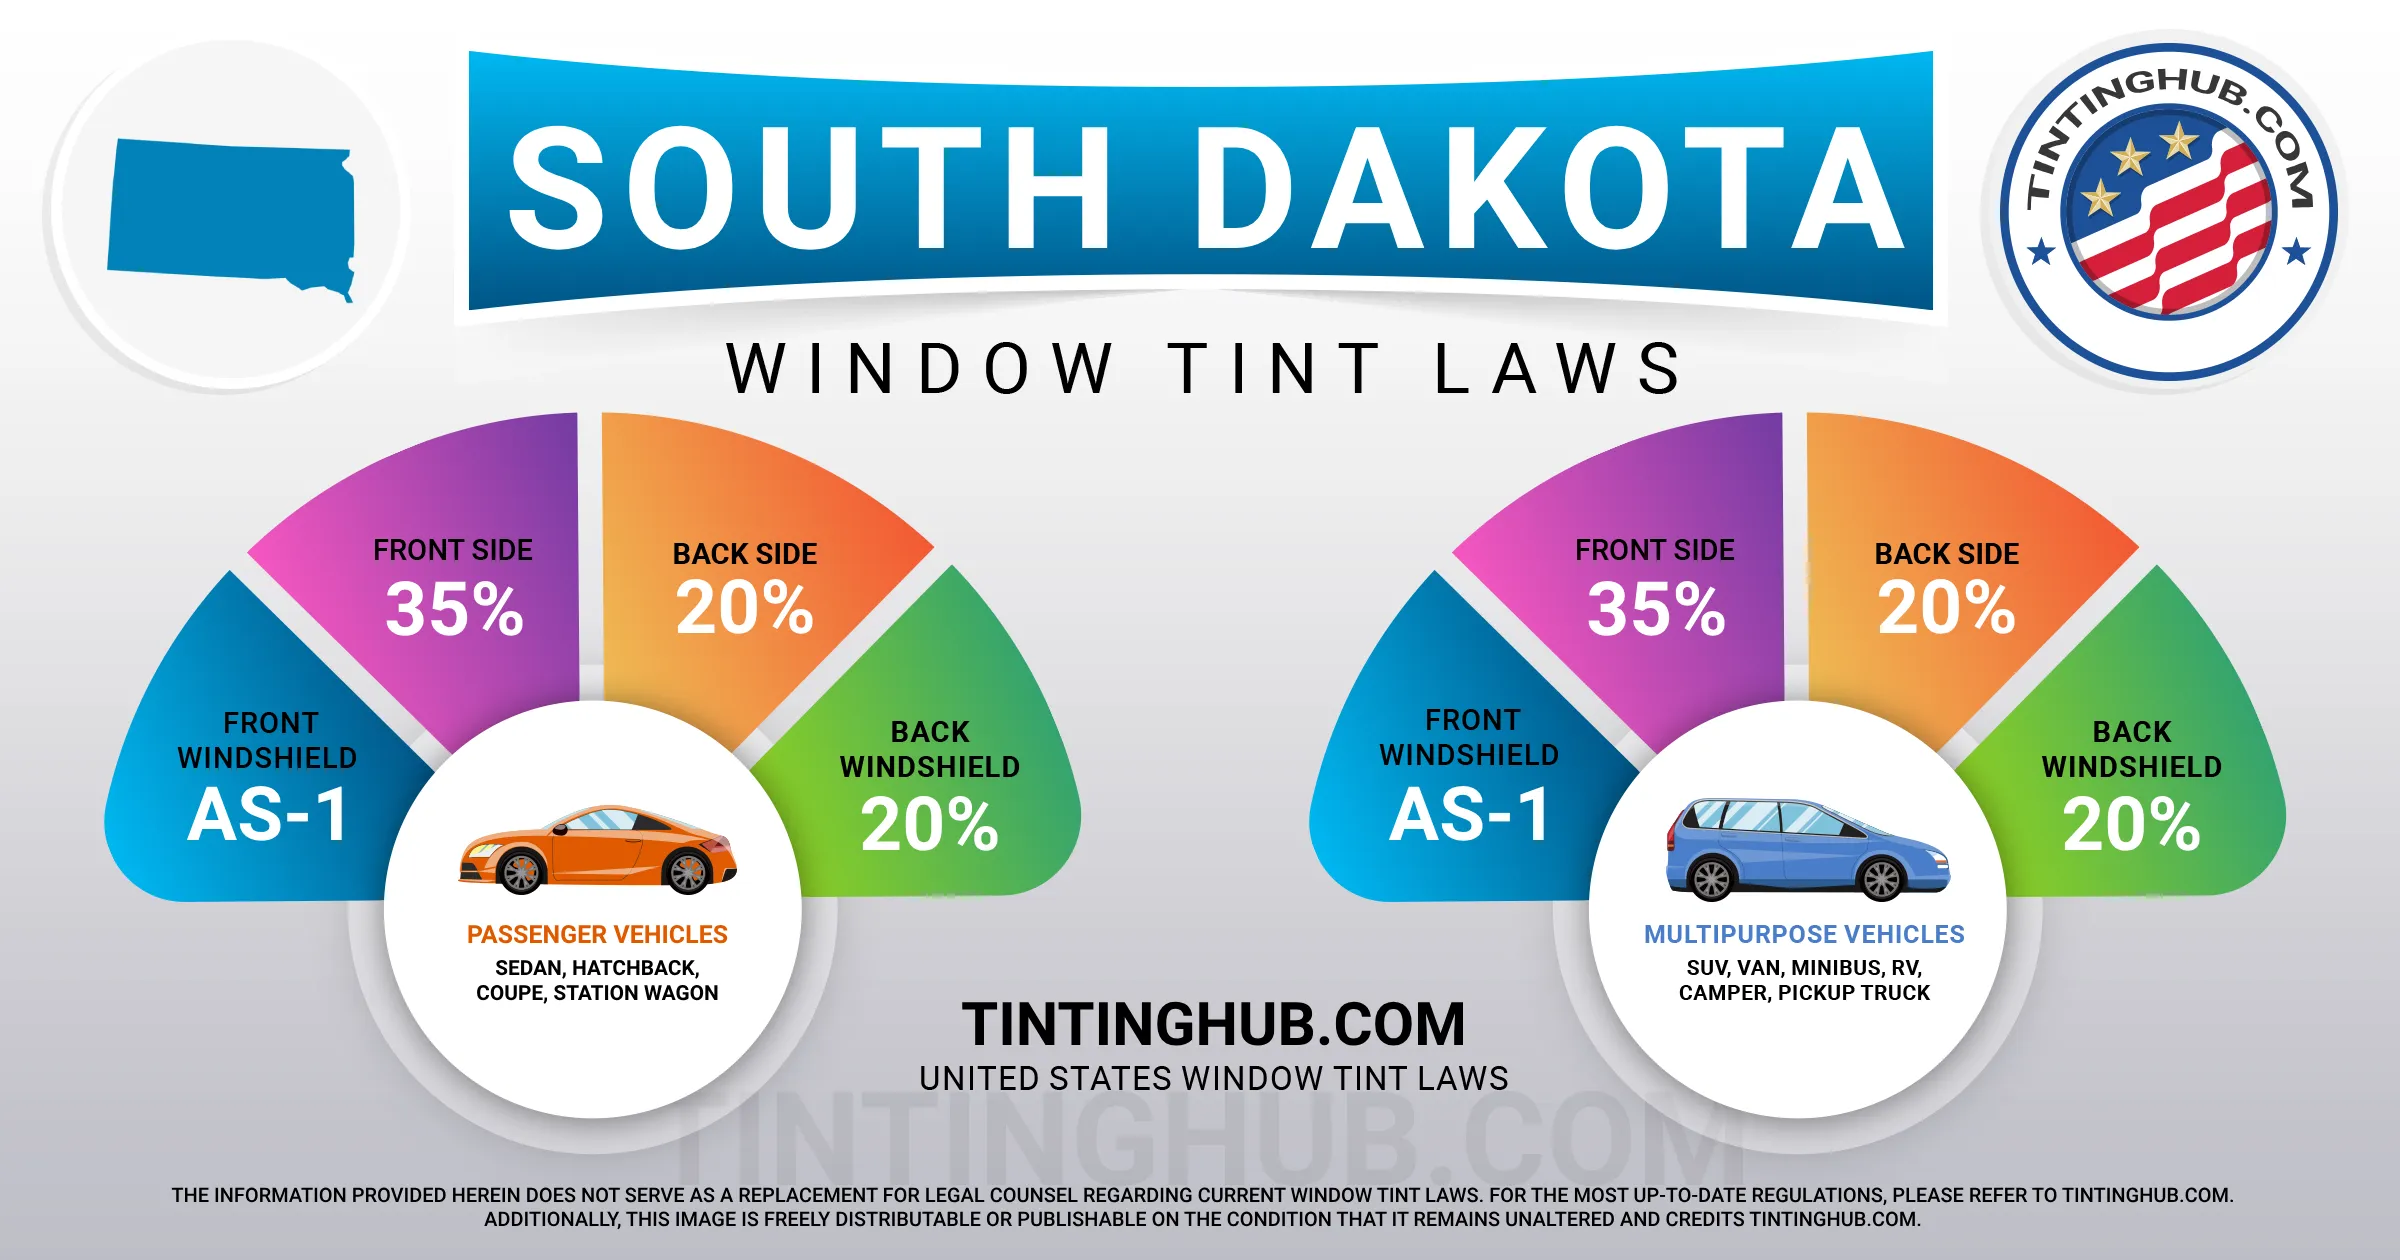 South Dakota Automobile Window Tint Laws